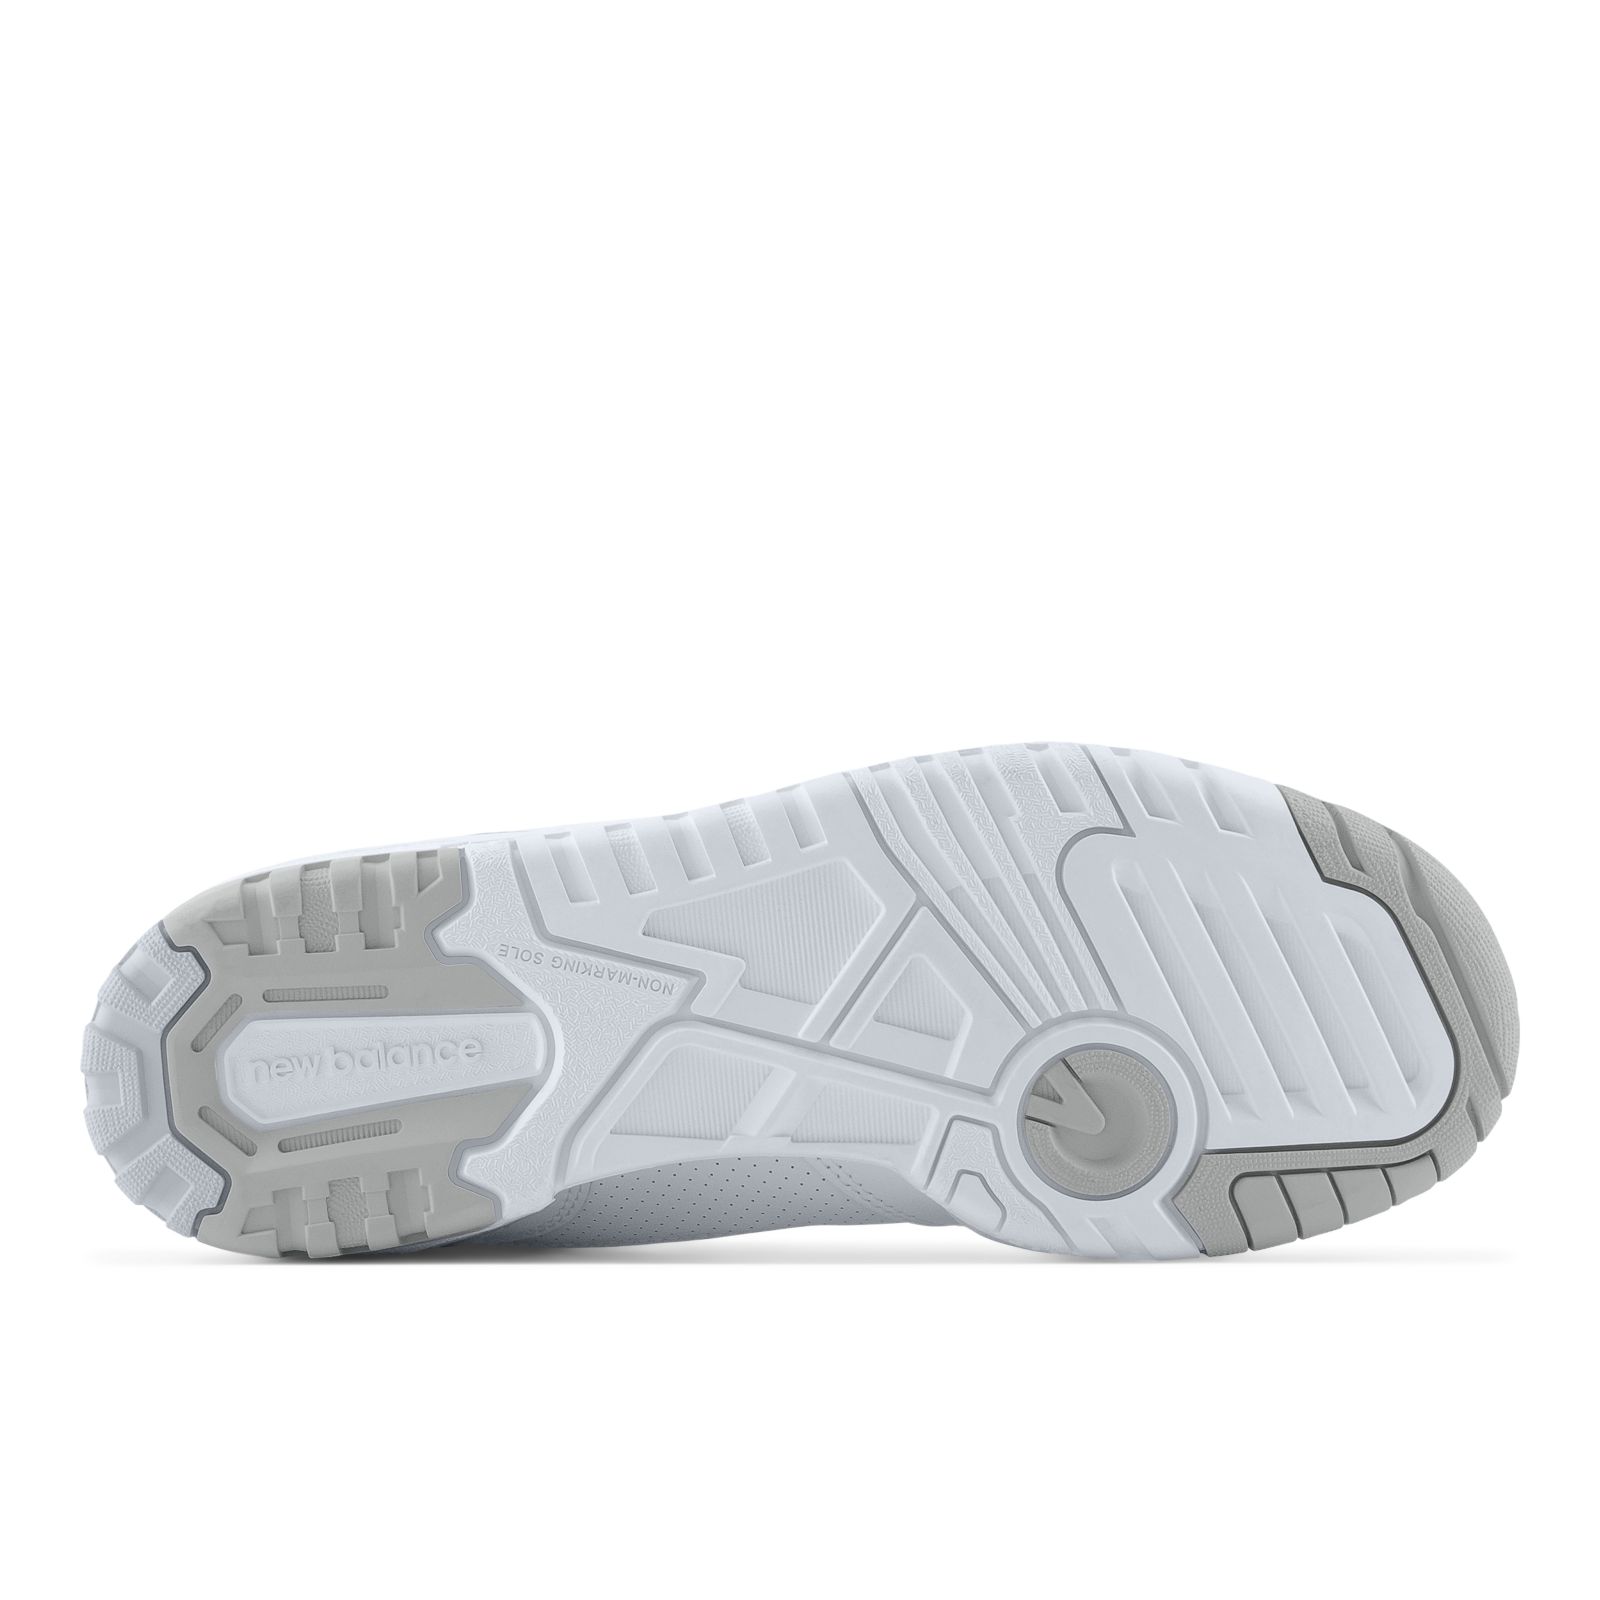 NEW BALANCE 550 | Light grey Women‘s Sneakers | YOOX